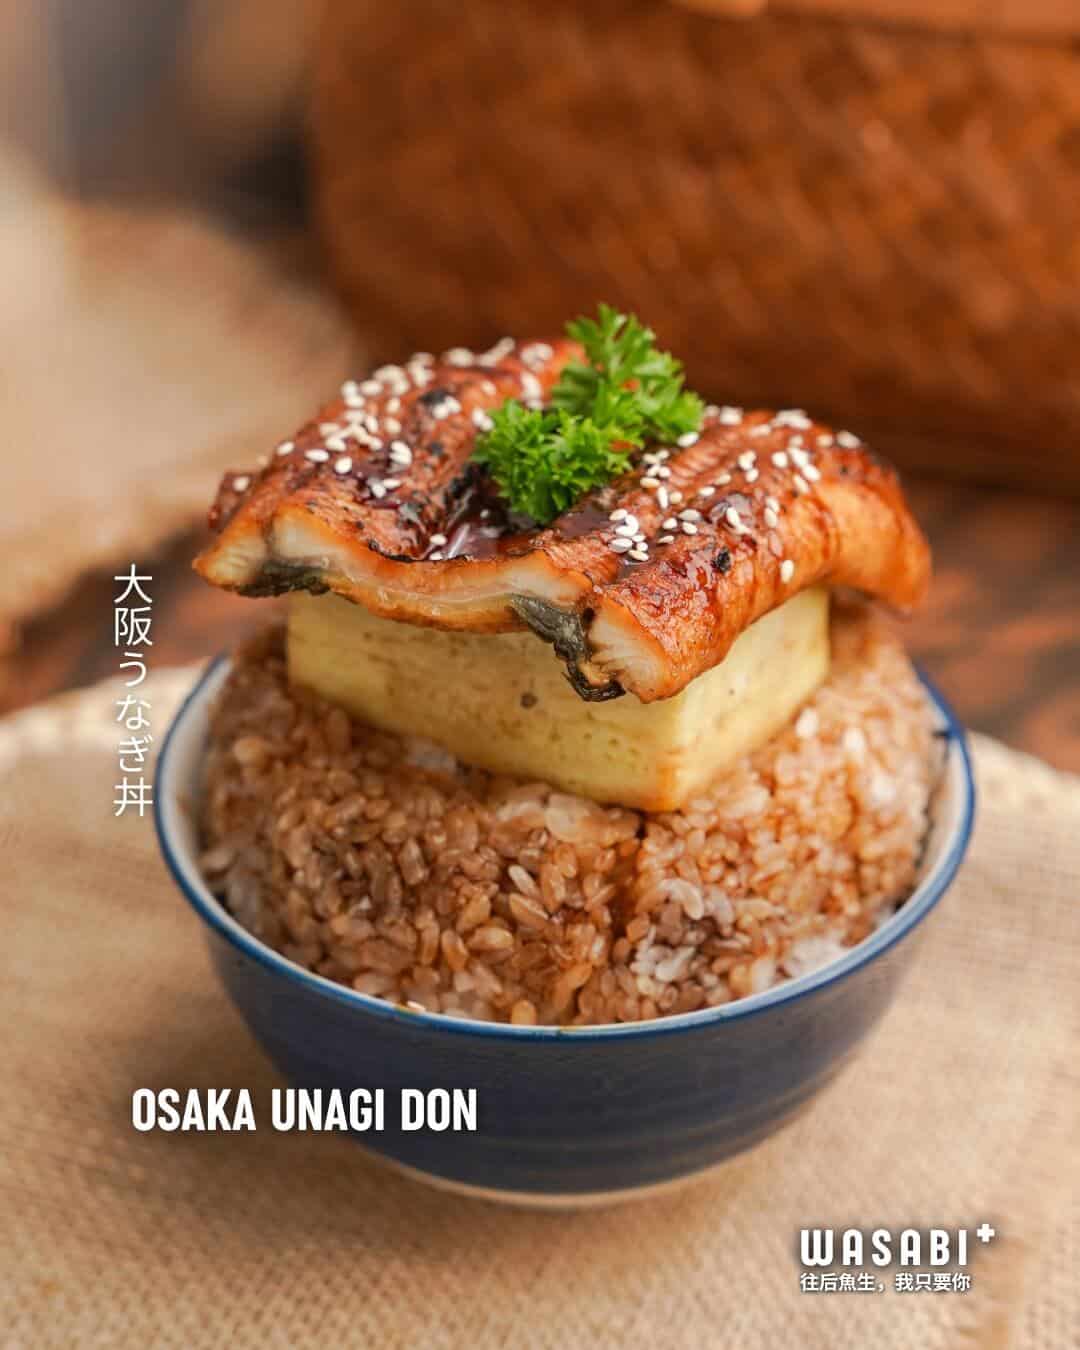 kepong community wasabi plus 3